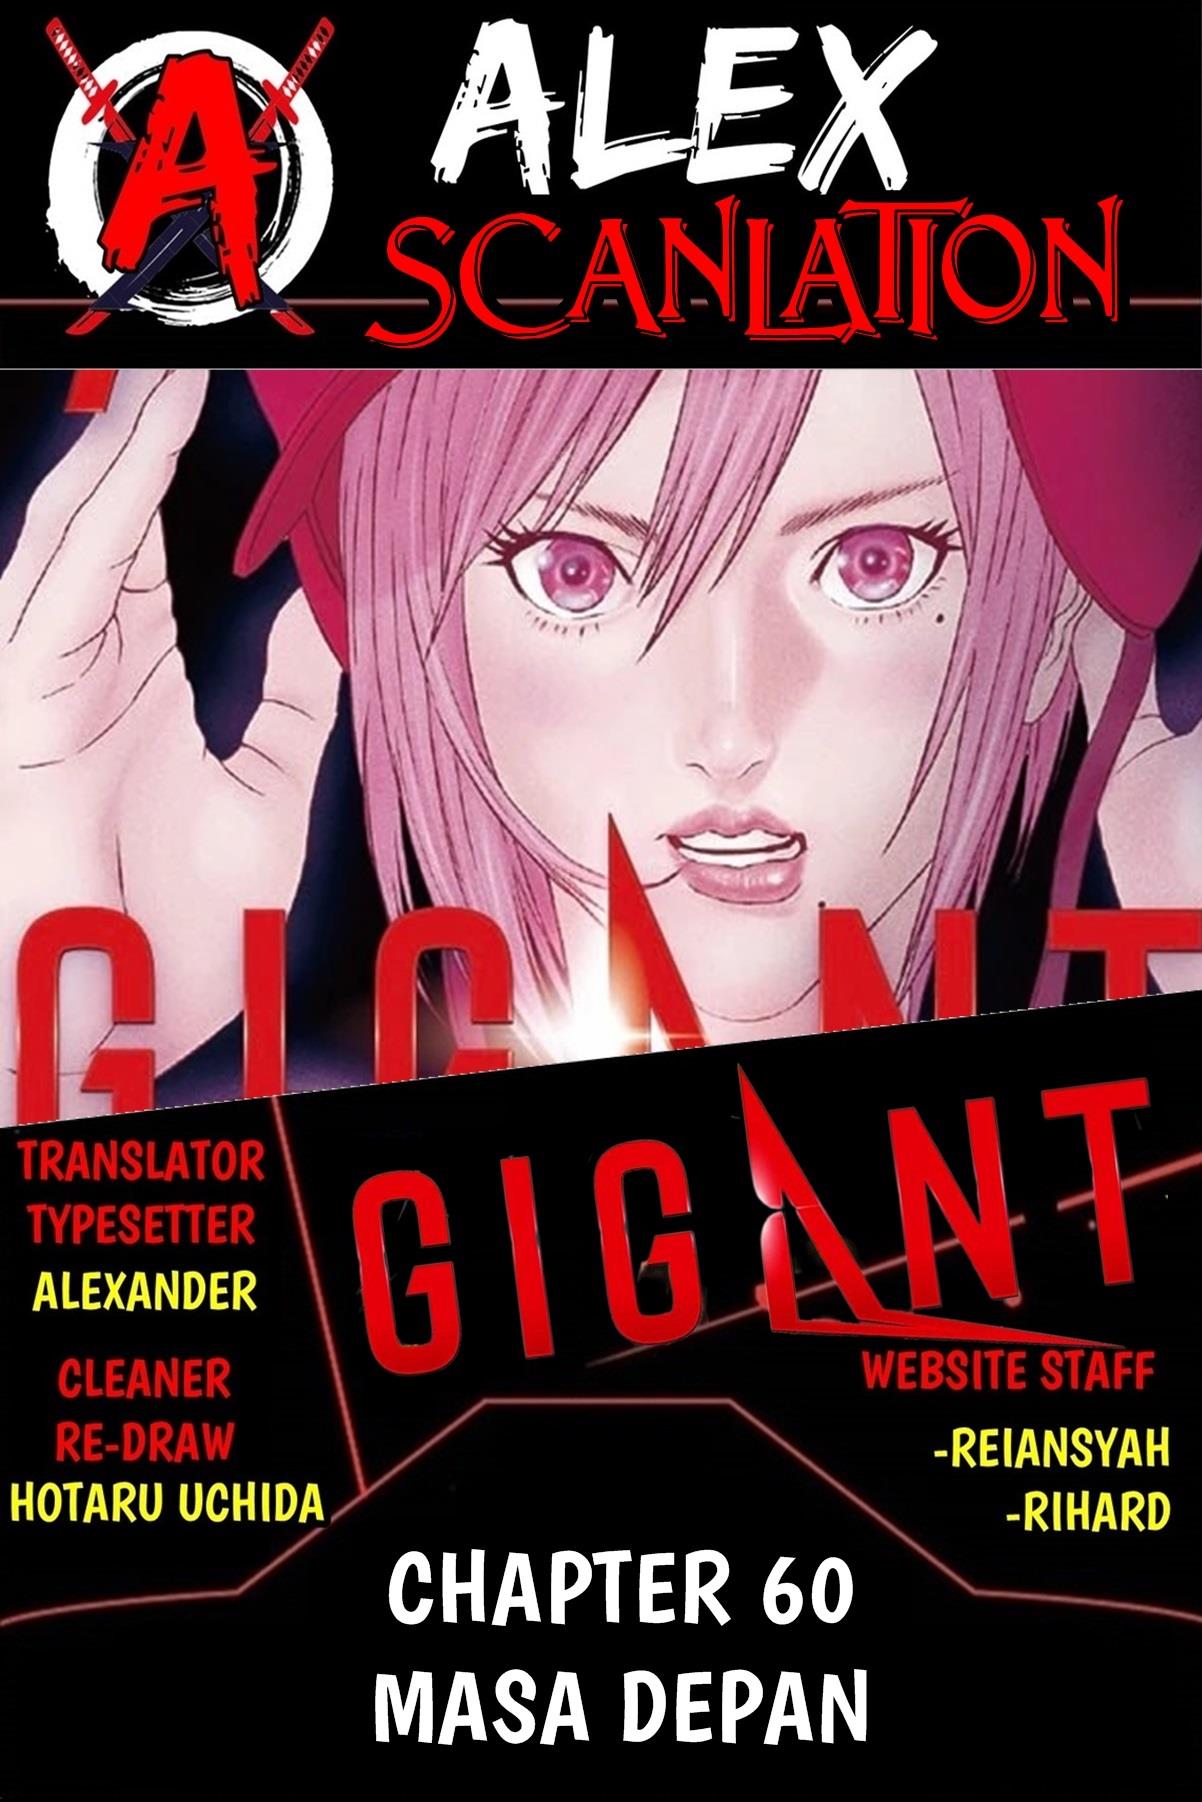 GIGANT Chapter 60